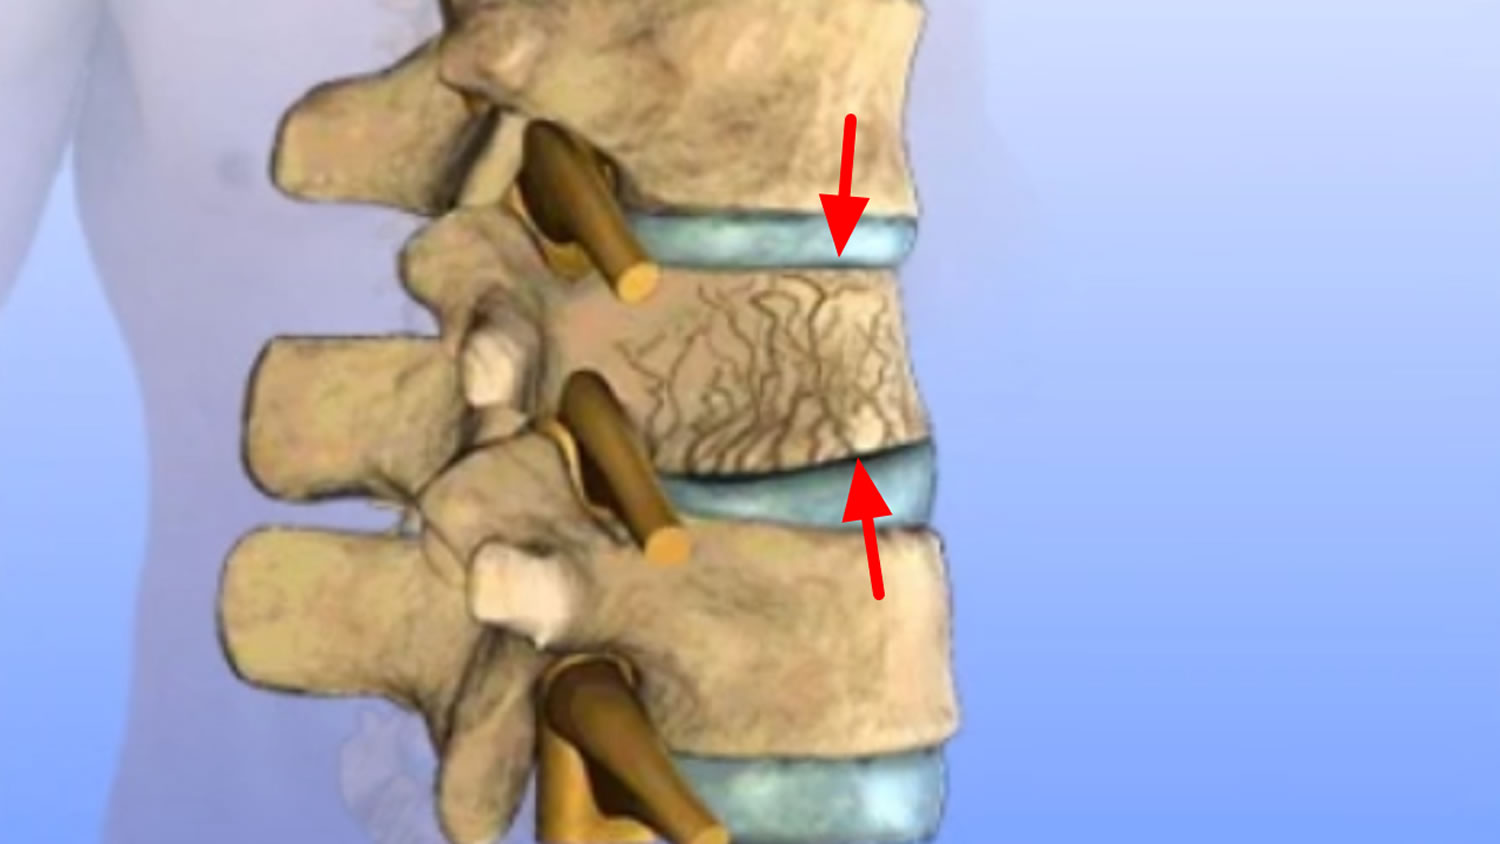 vertebral compression fracture treatment in elderly